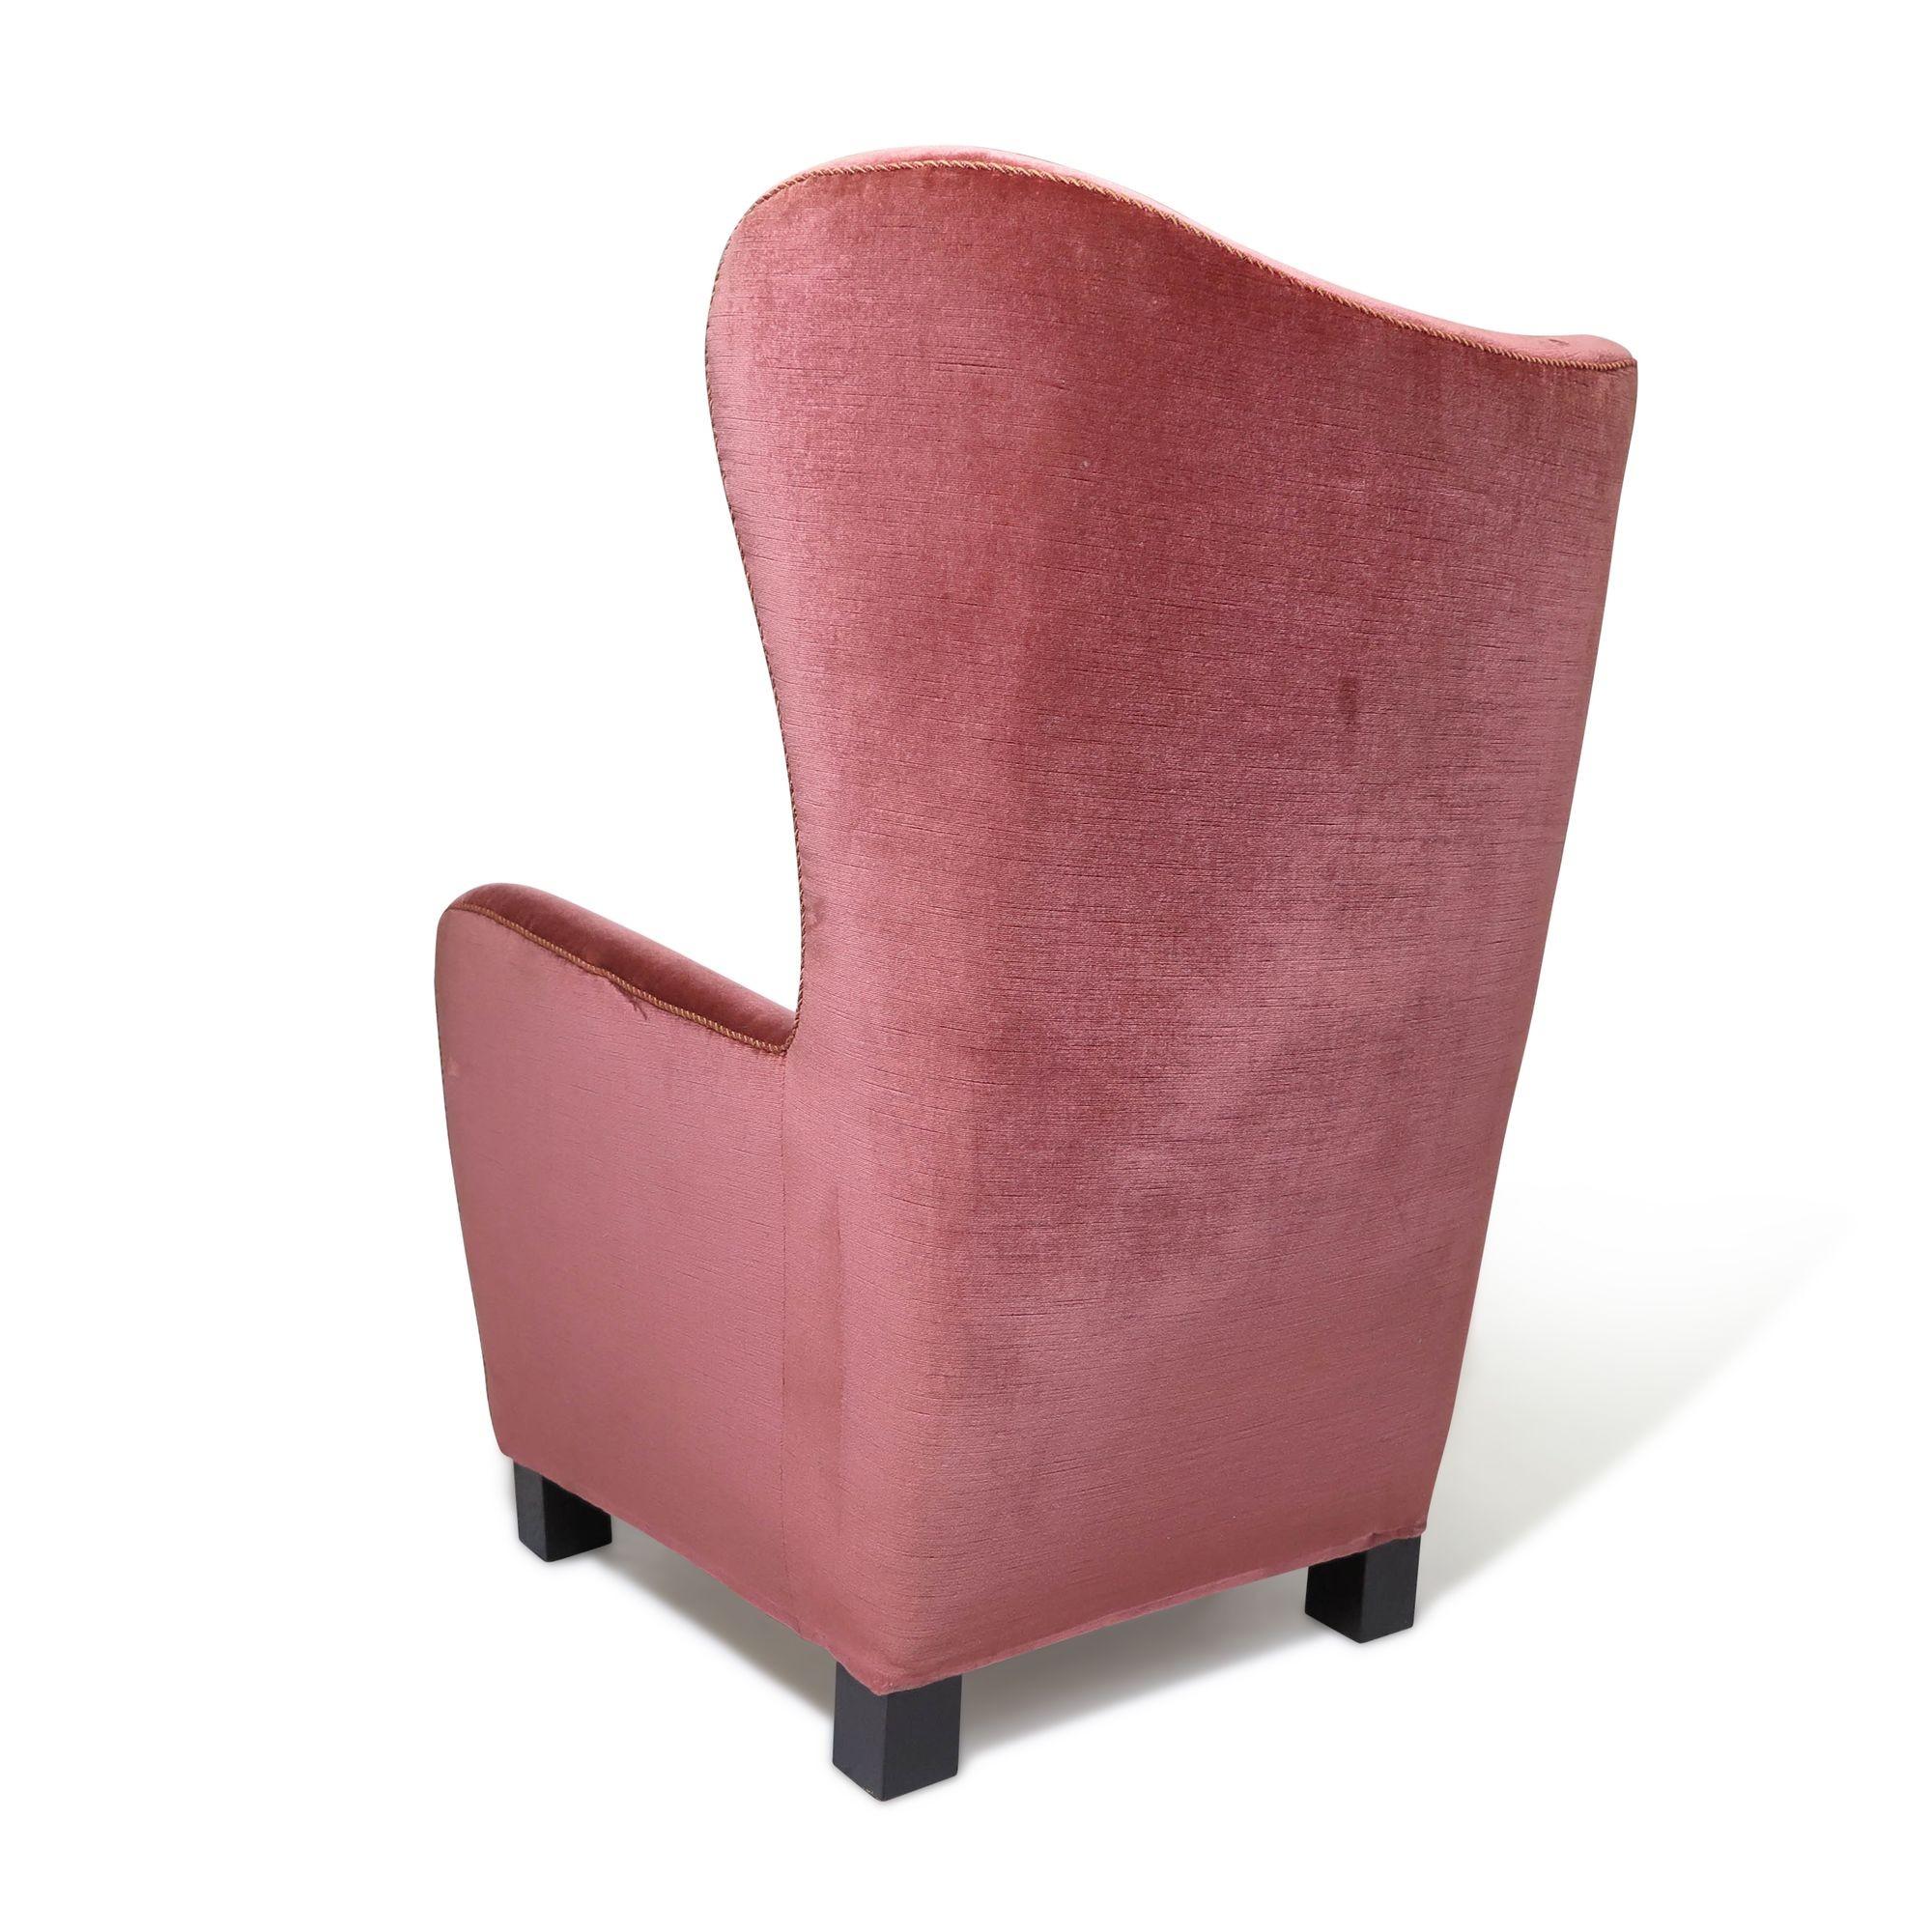 1942 Fritz Hansen High-back Lounge Chair #1672 in Original Mohair For Sale 2